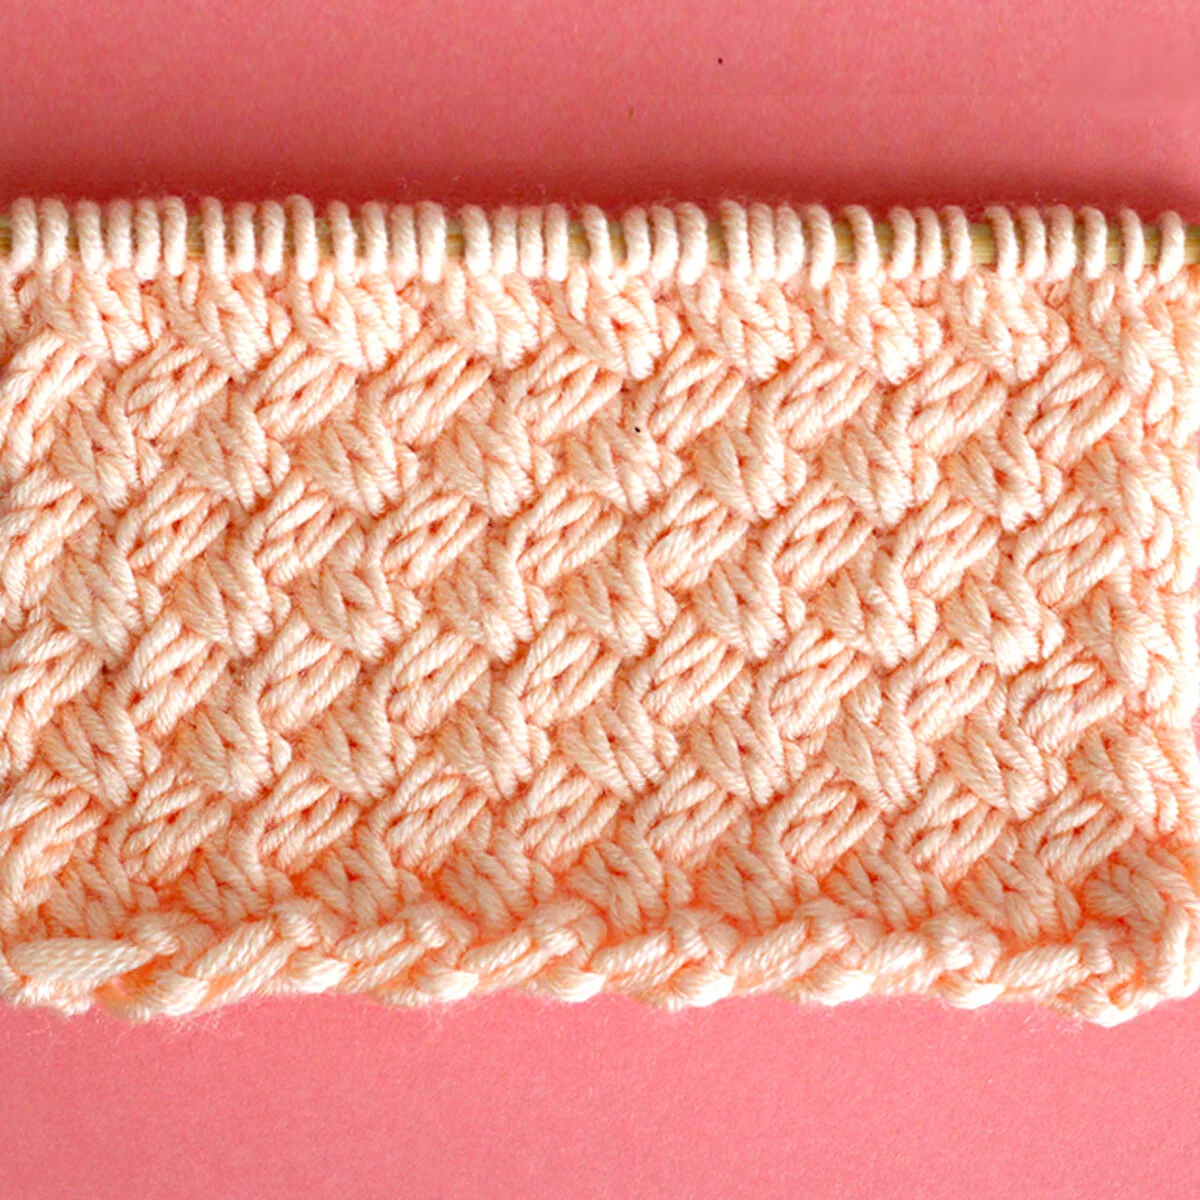 Garter Stitched Baskets Knit Pattern